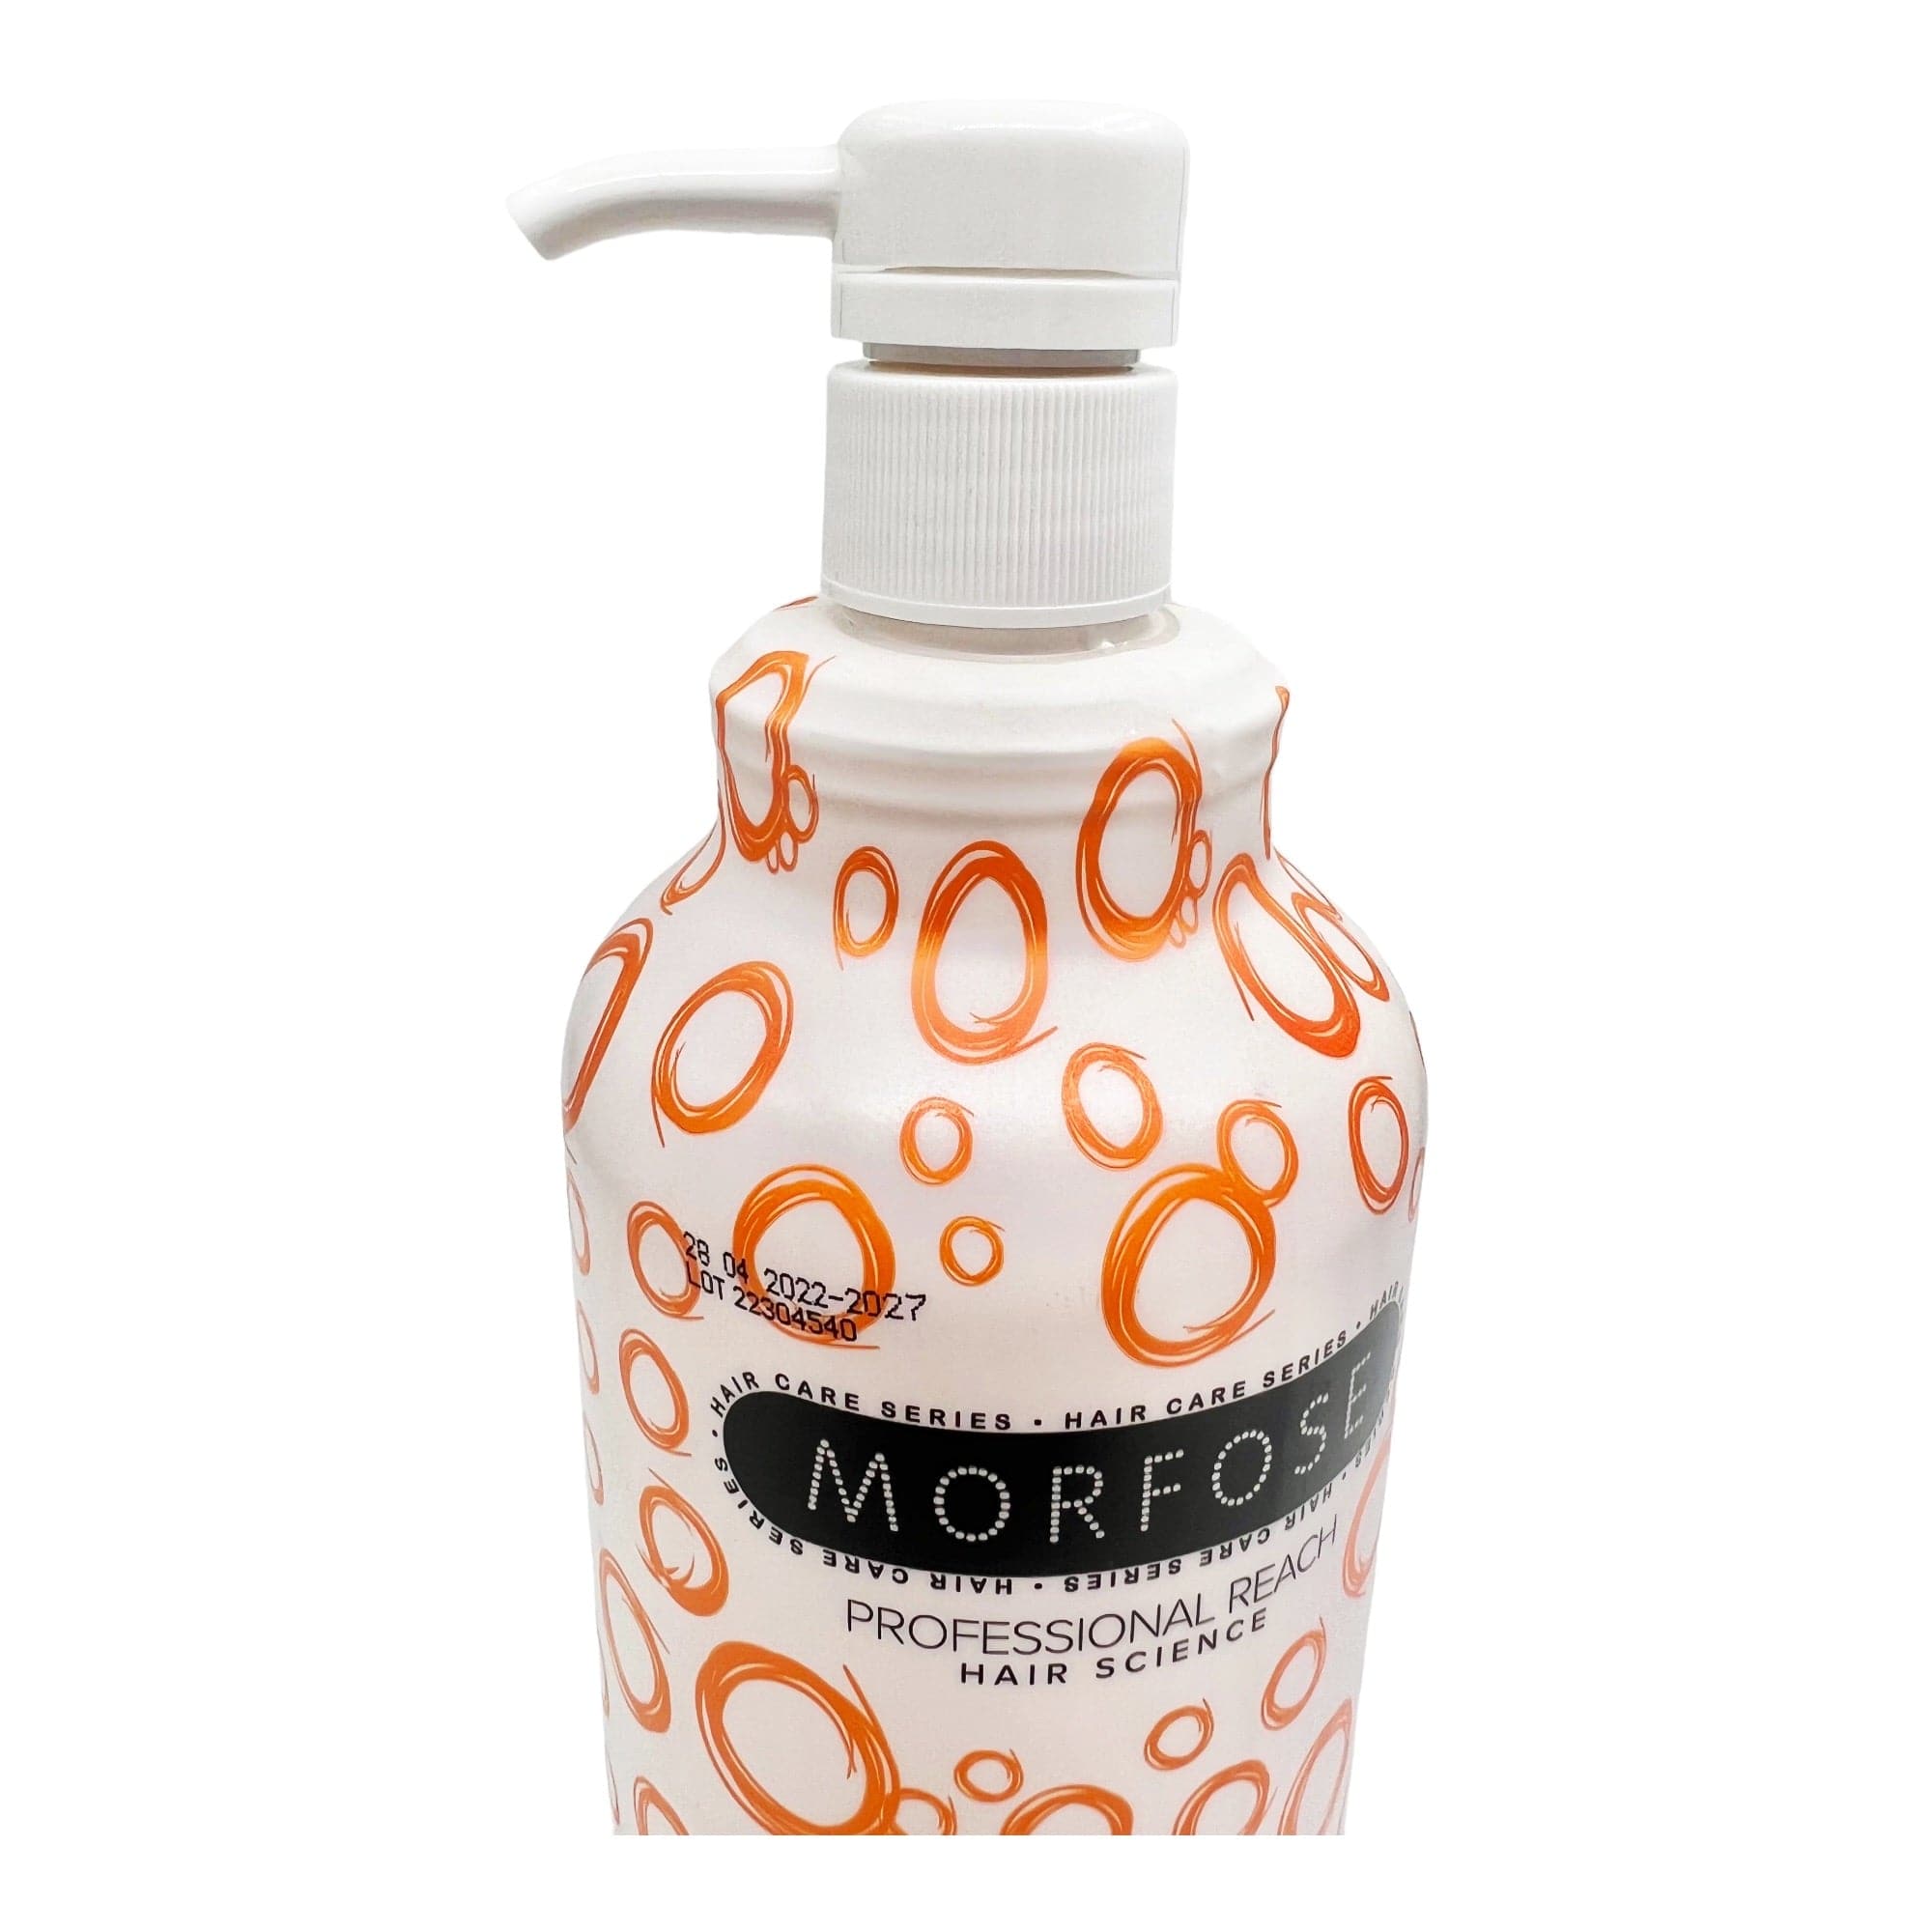 Morfose - Argan Hair Shampoo 1000ml